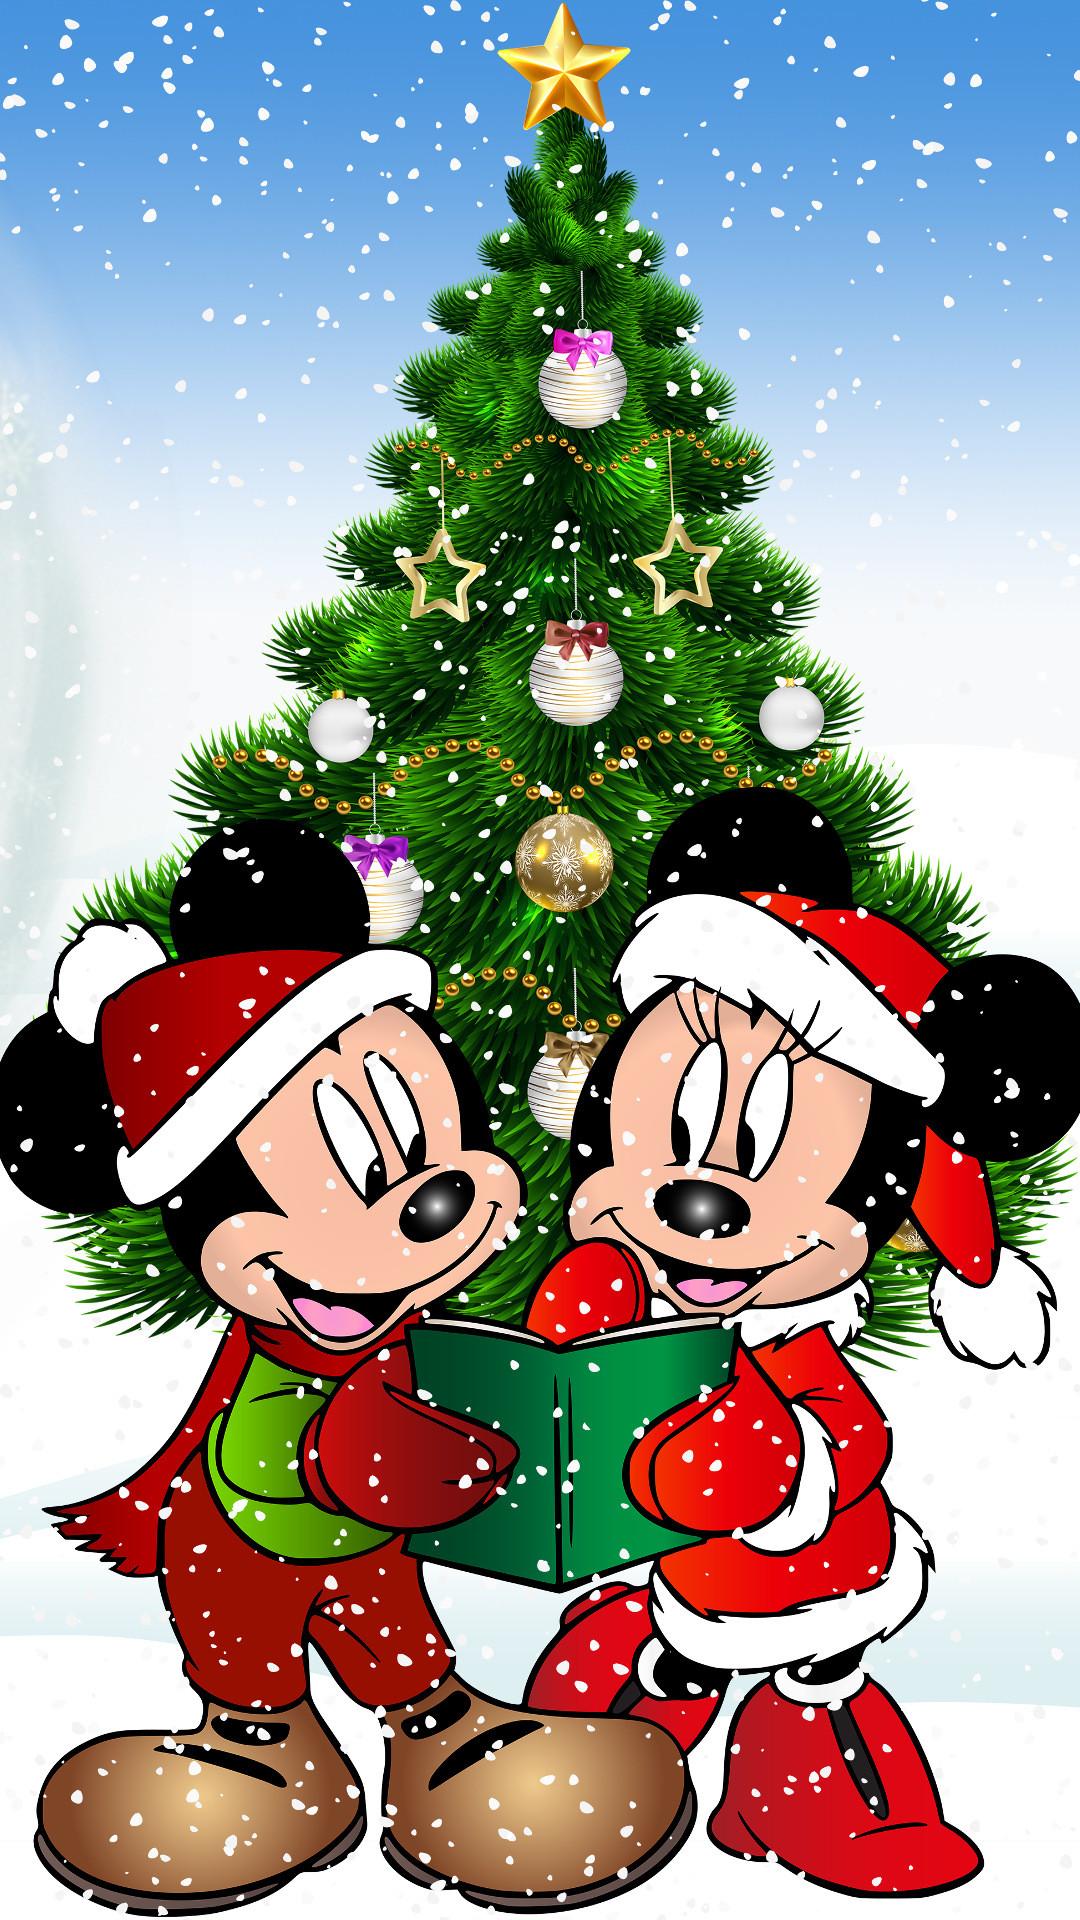 Disney Christmas iPhone Wallpaper HD